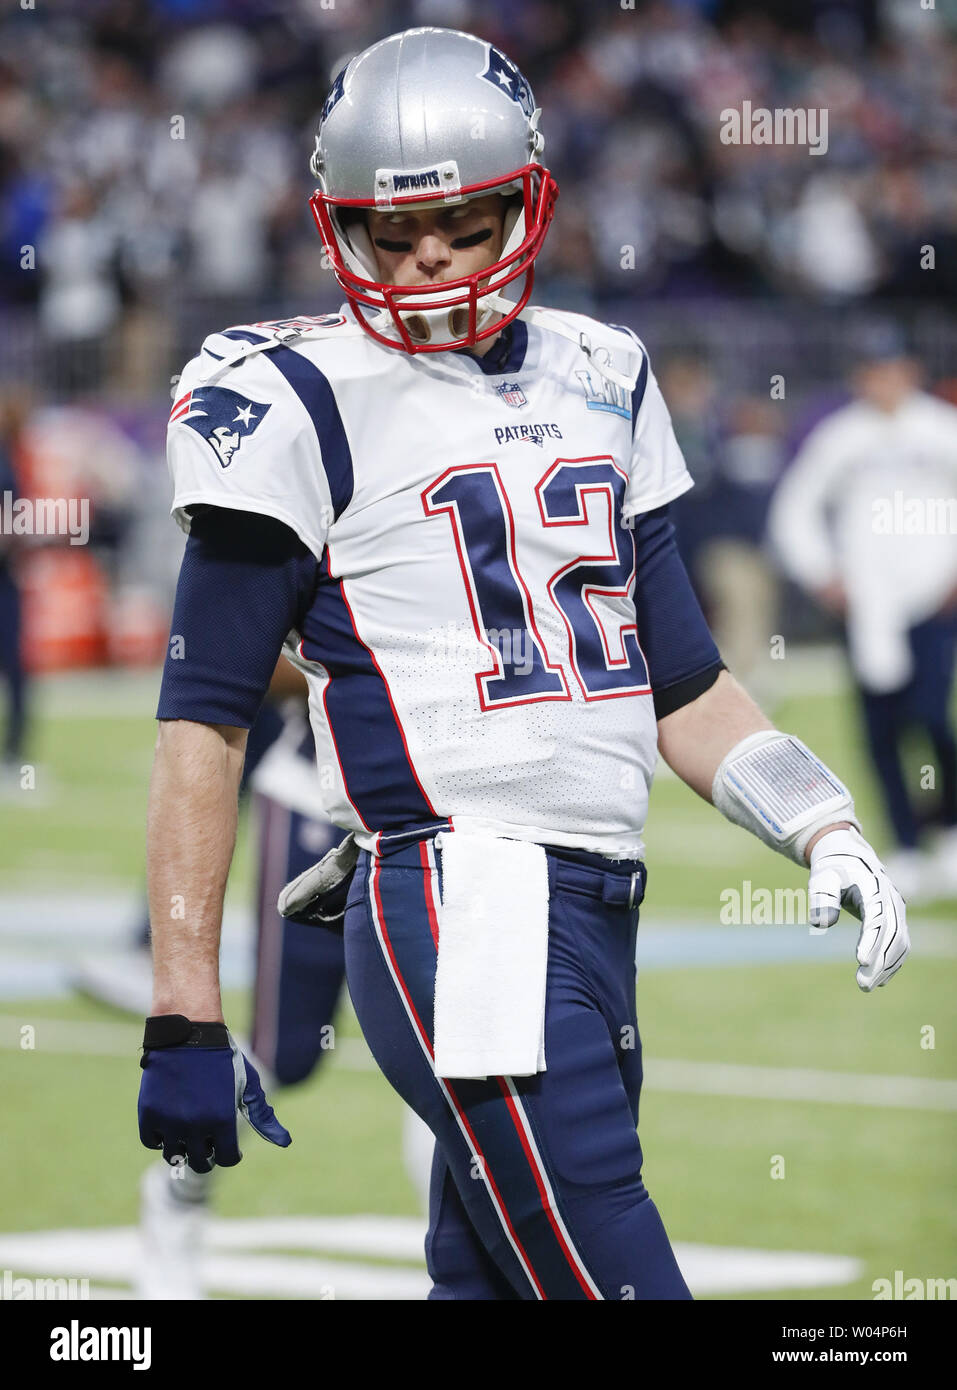 New England Patriots quarterback Tom Brady walks on the field before the Super  Bowl LII at U.S. Bank Stadium in Minneapolis, Minnesota on February 4, 2018.  The Eagles will be seeking their